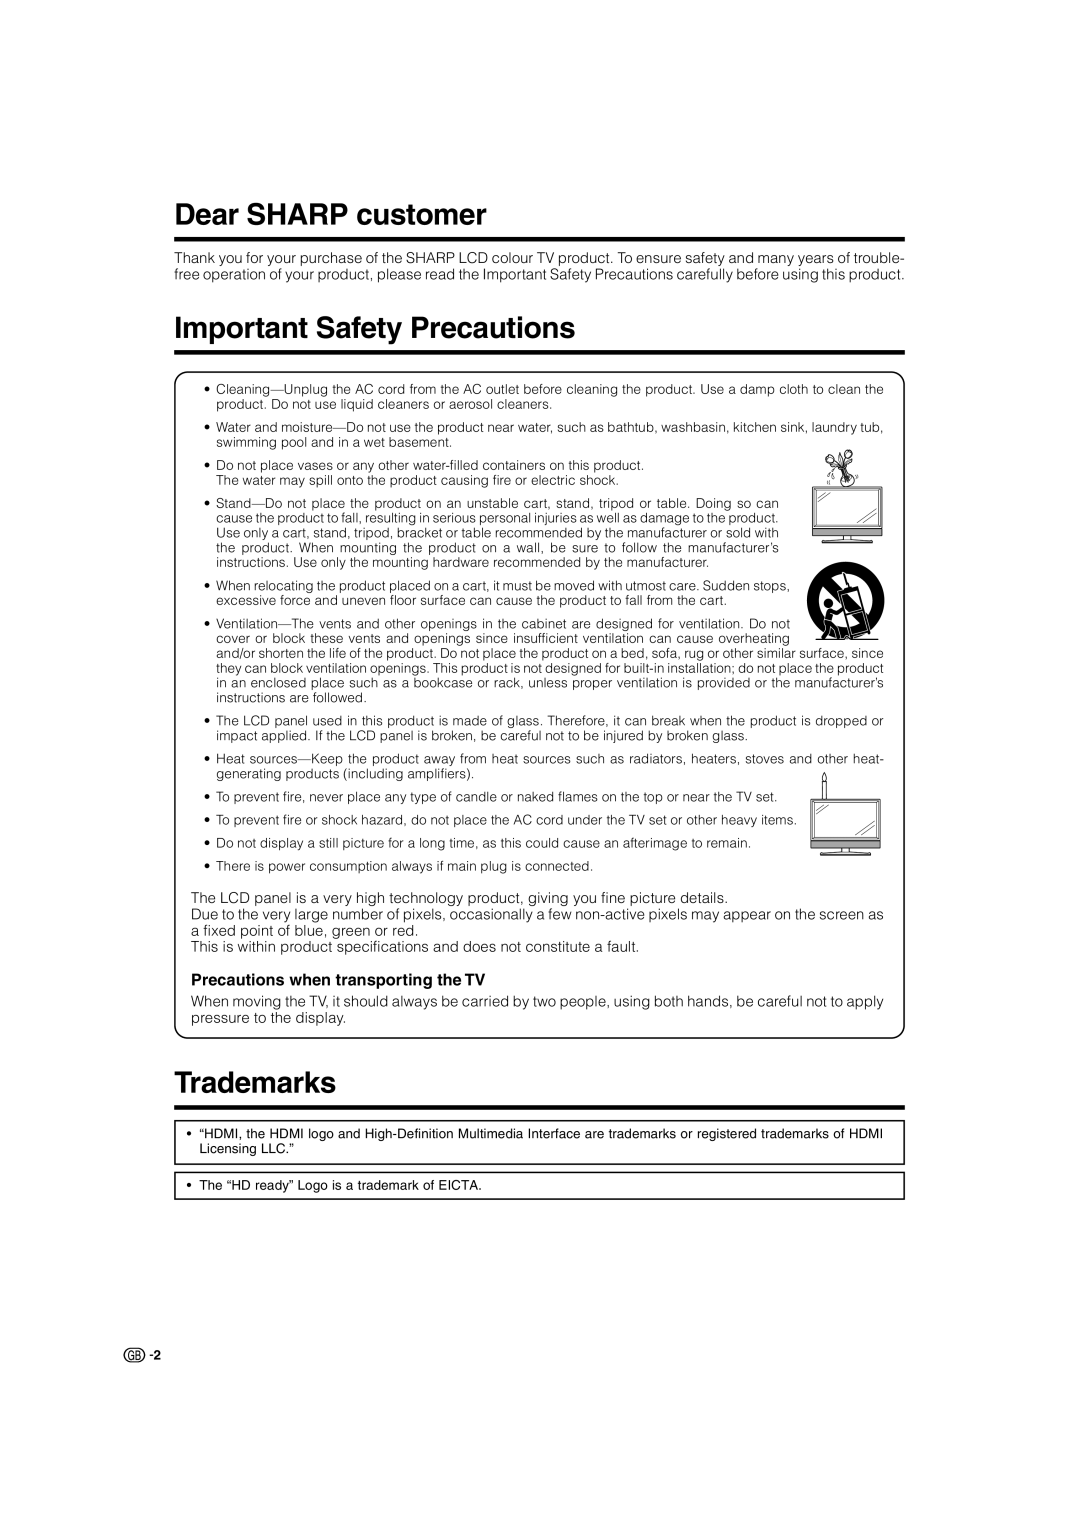 Sharp LC-37BT8E Dear SHARP customer, Important Safety Precautions, Trademarks, Precautions when transporting the TV 